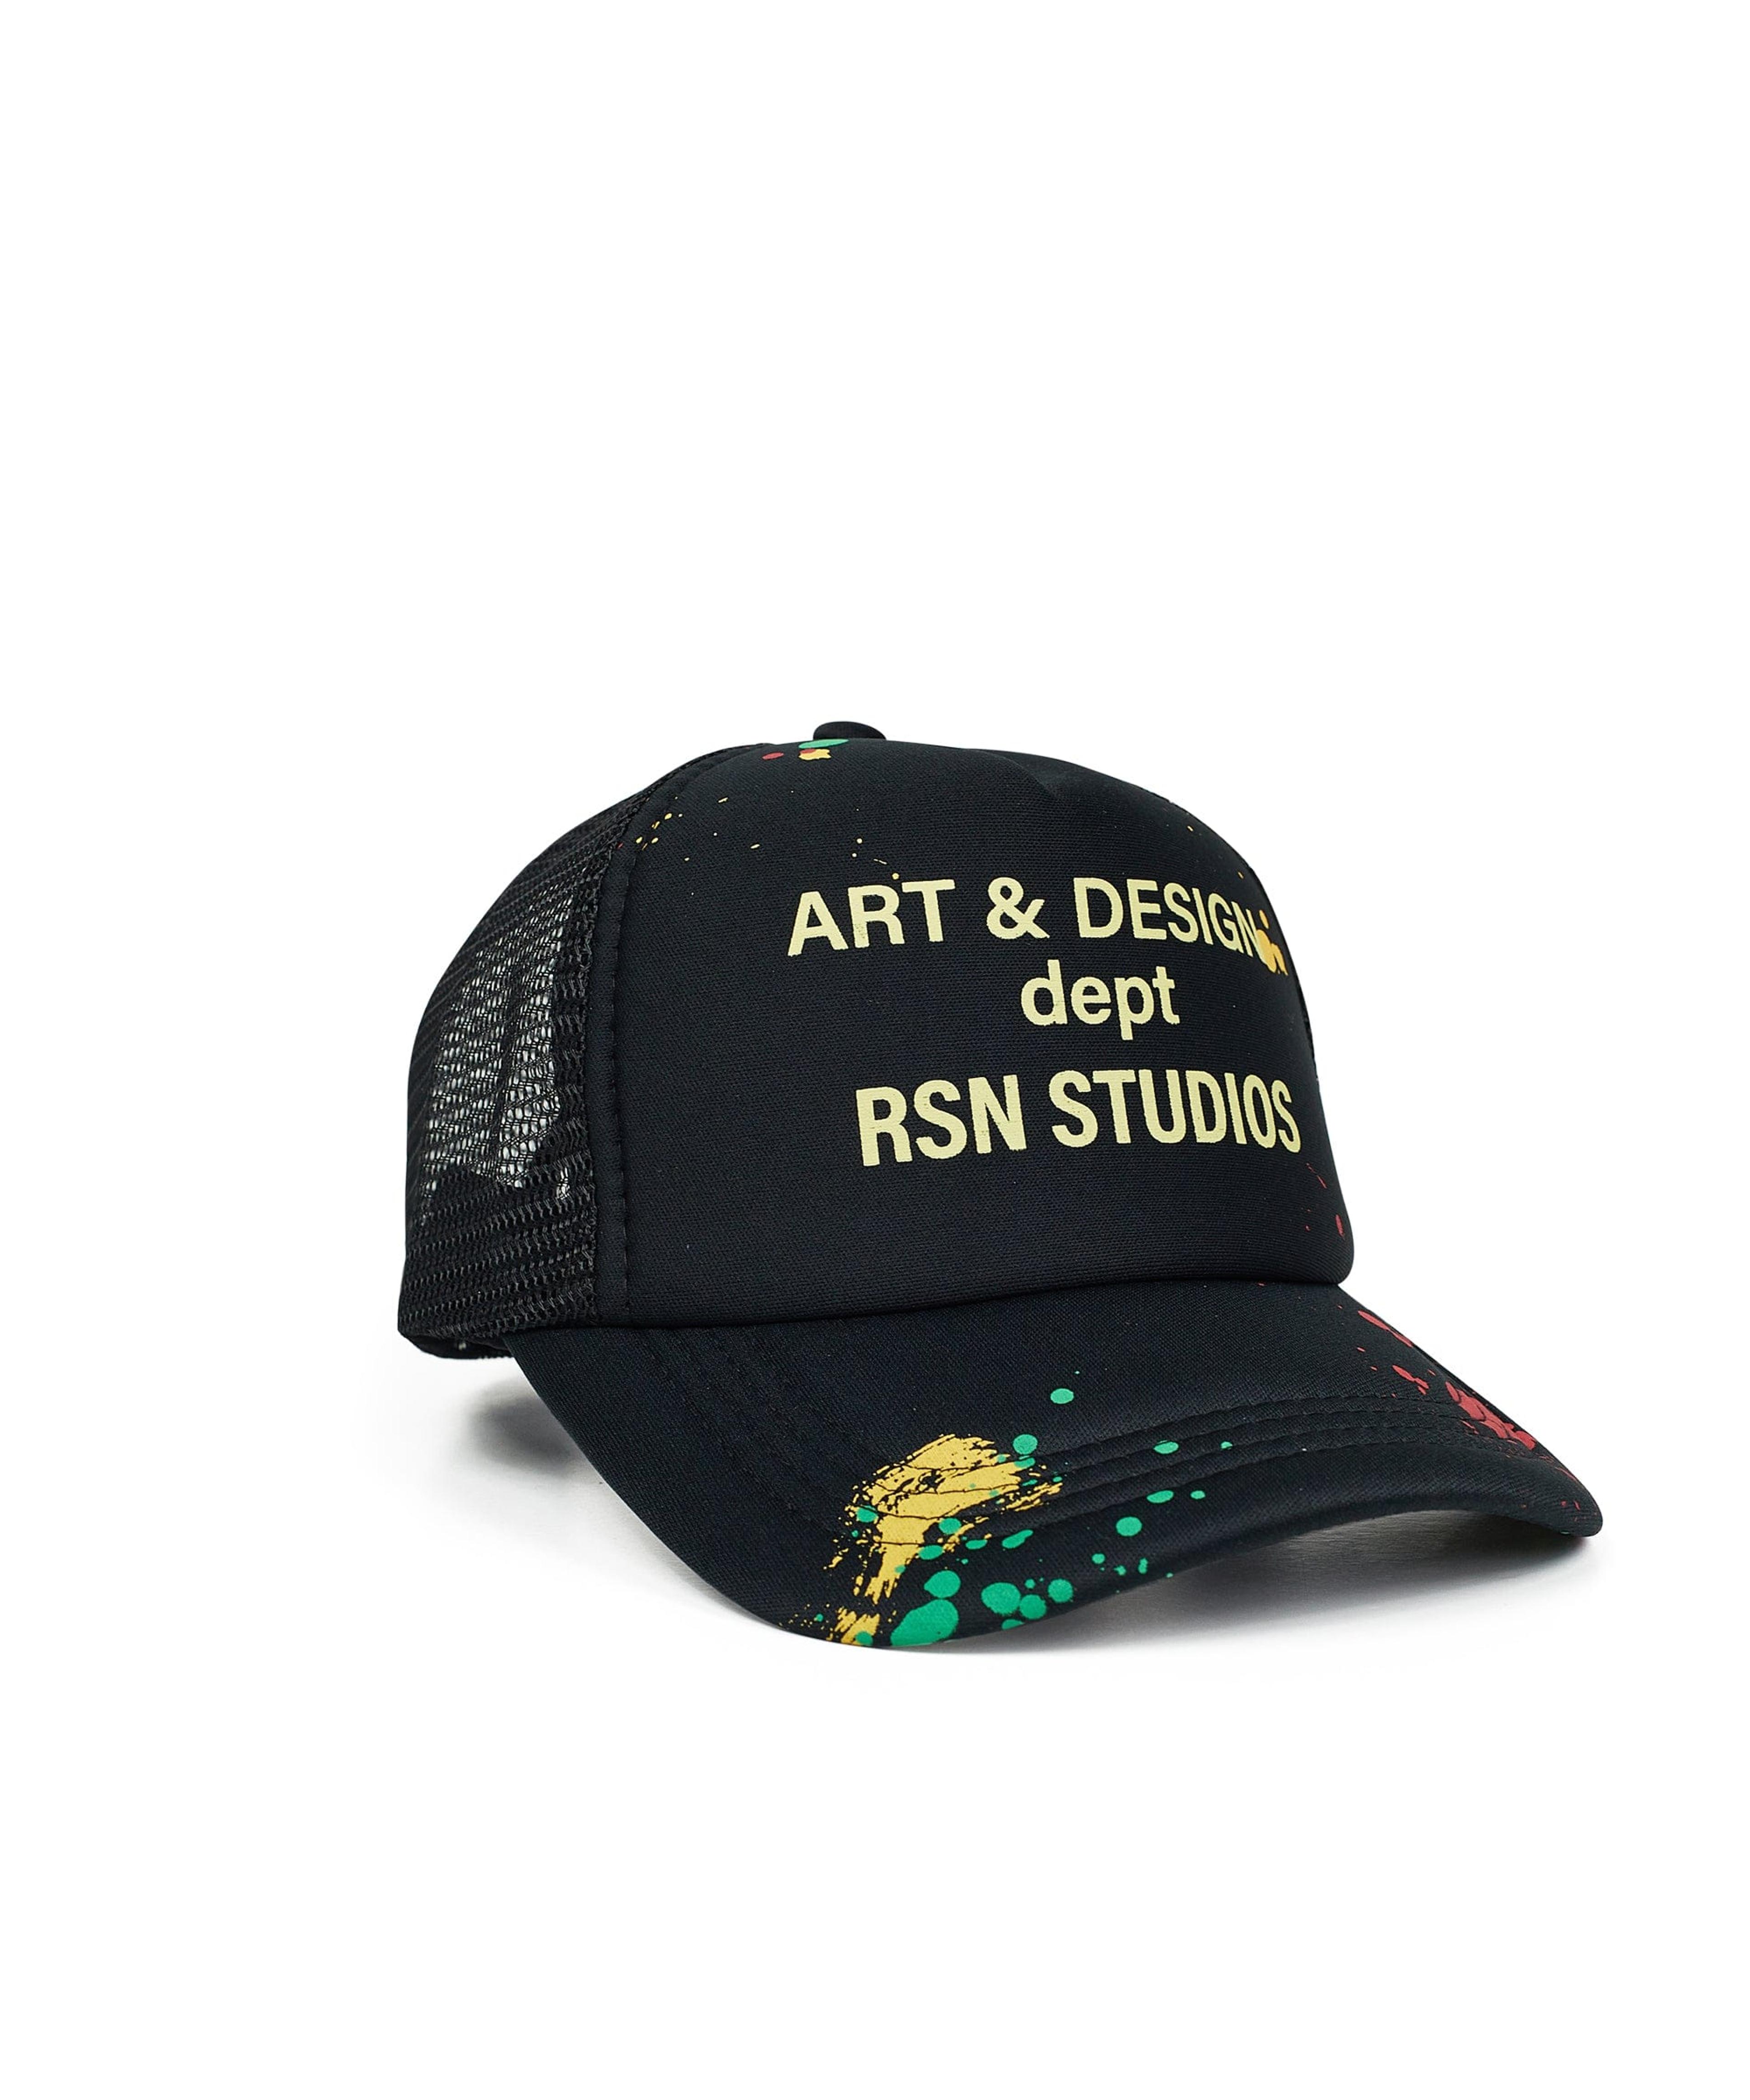 Alternate View 1 of RSN Studios Trucker Hat